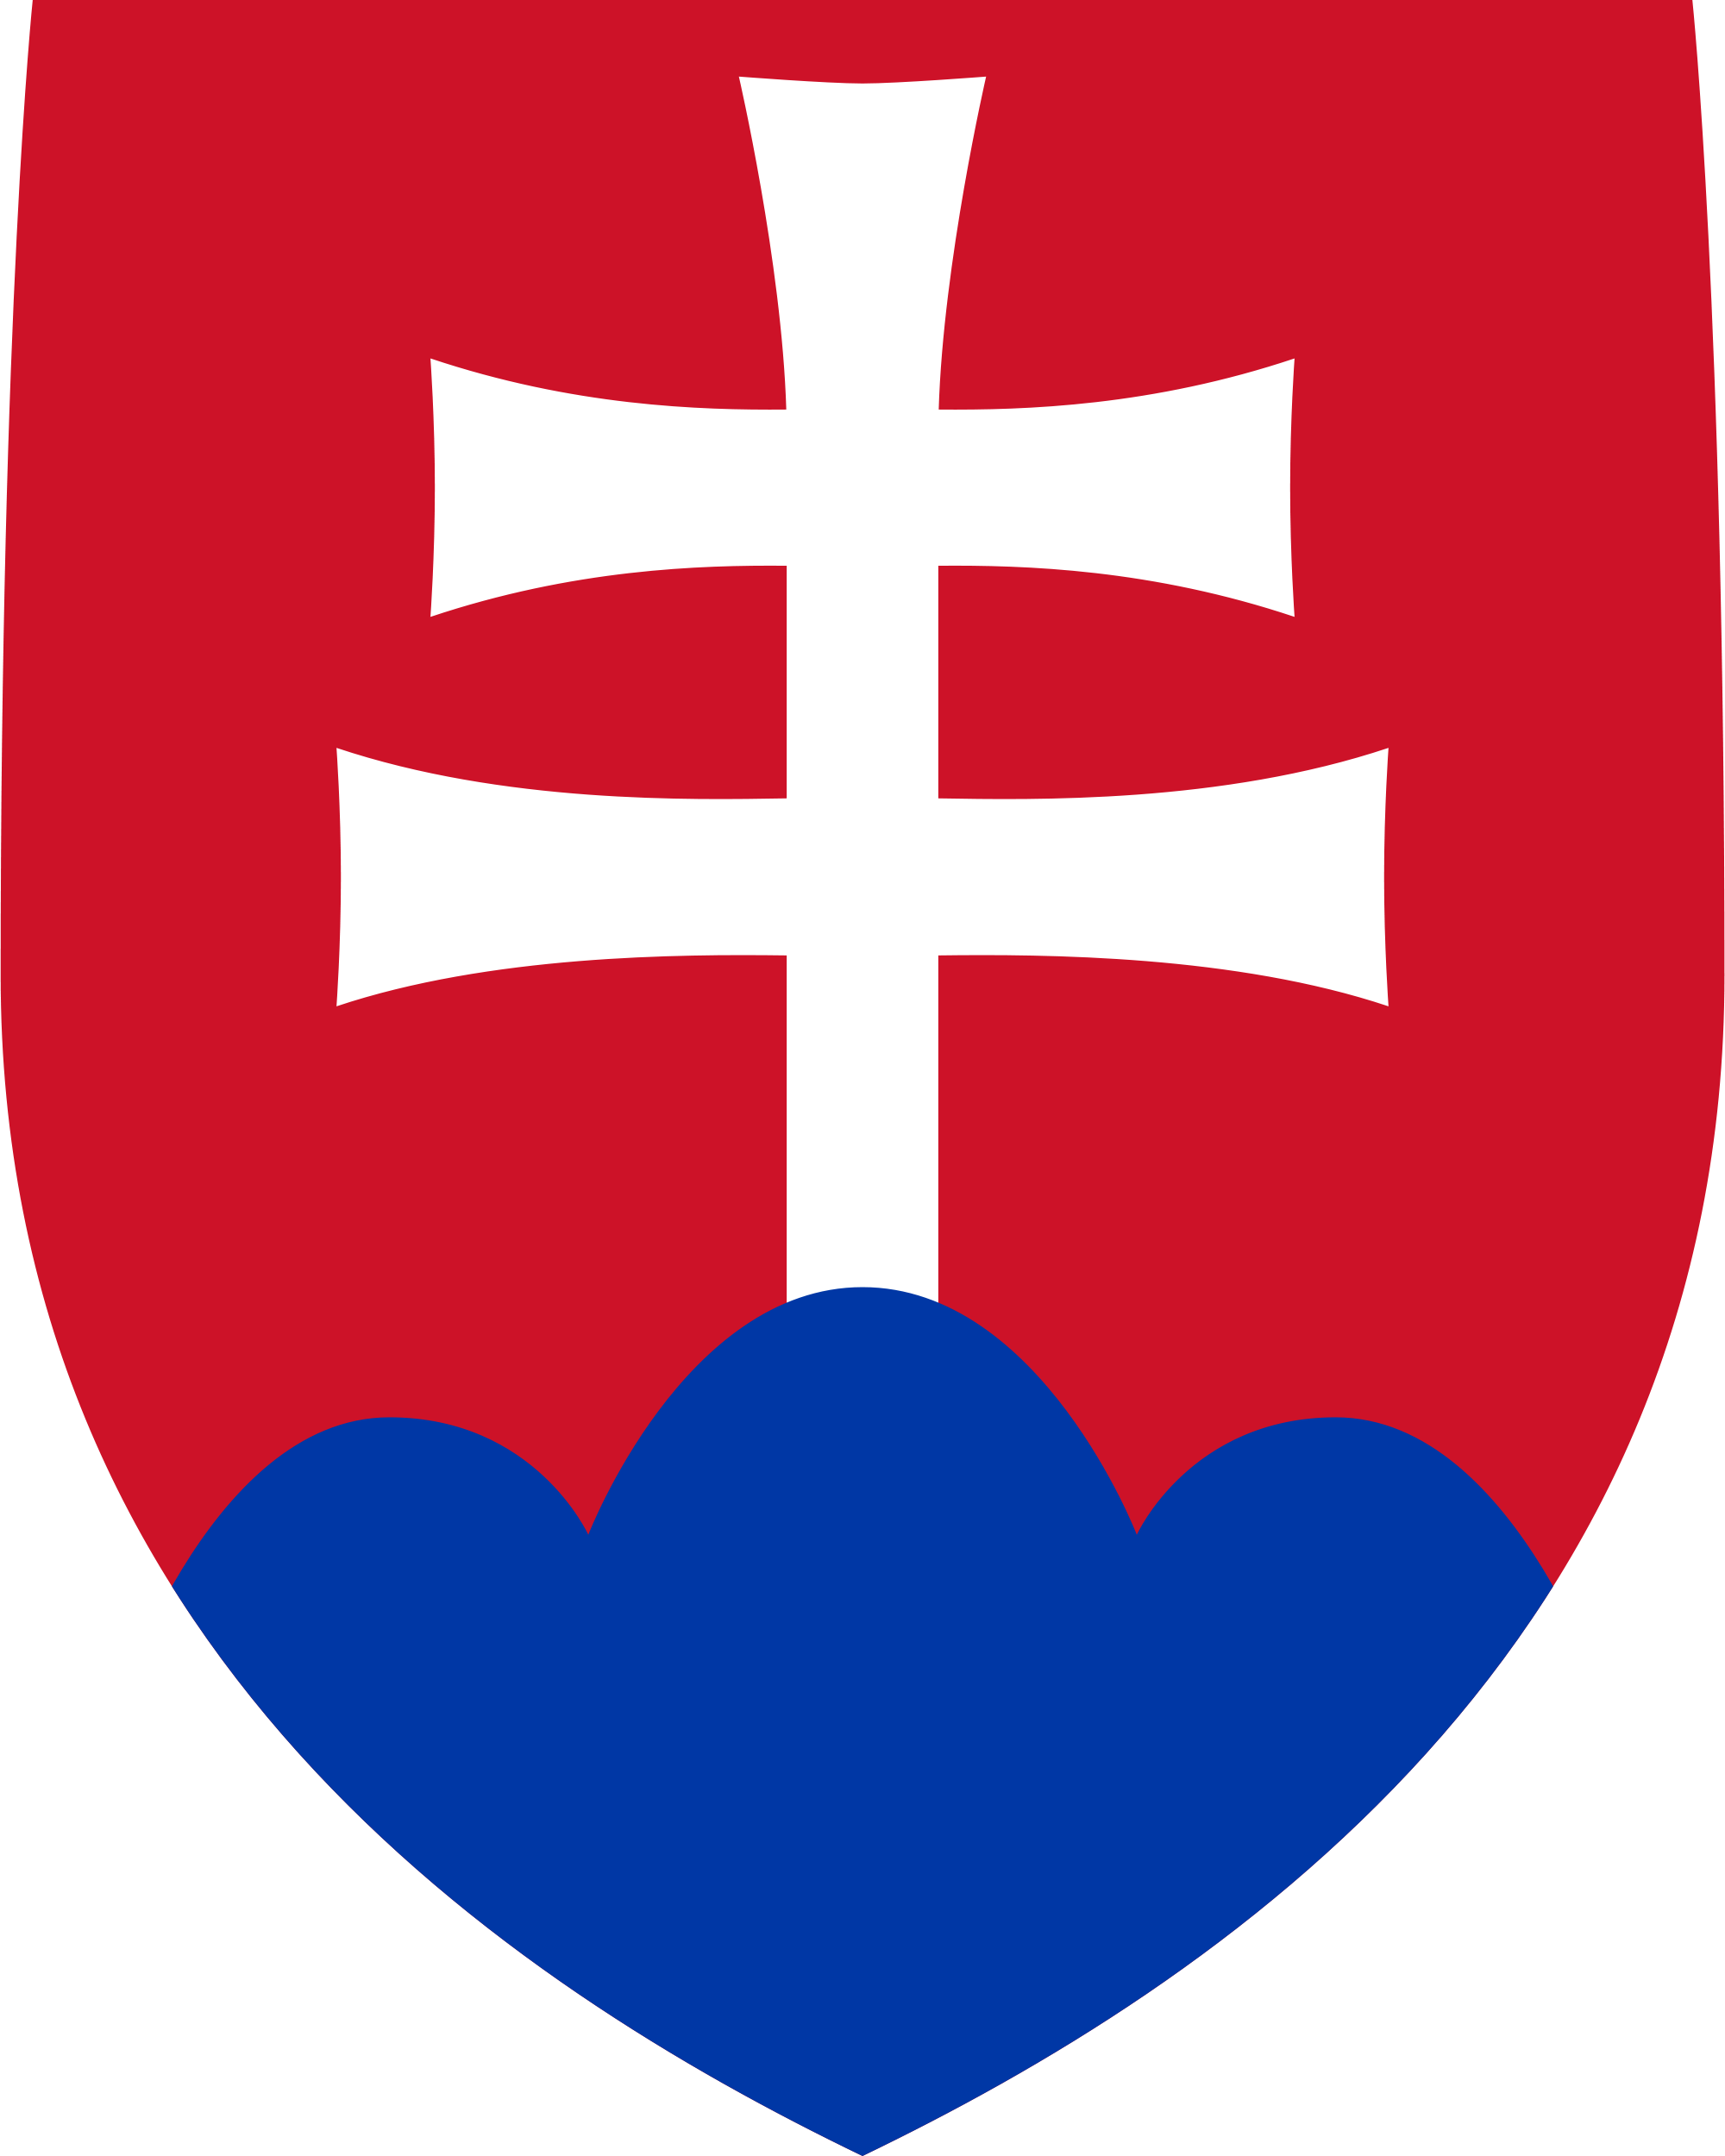 Emblem of Slovakia